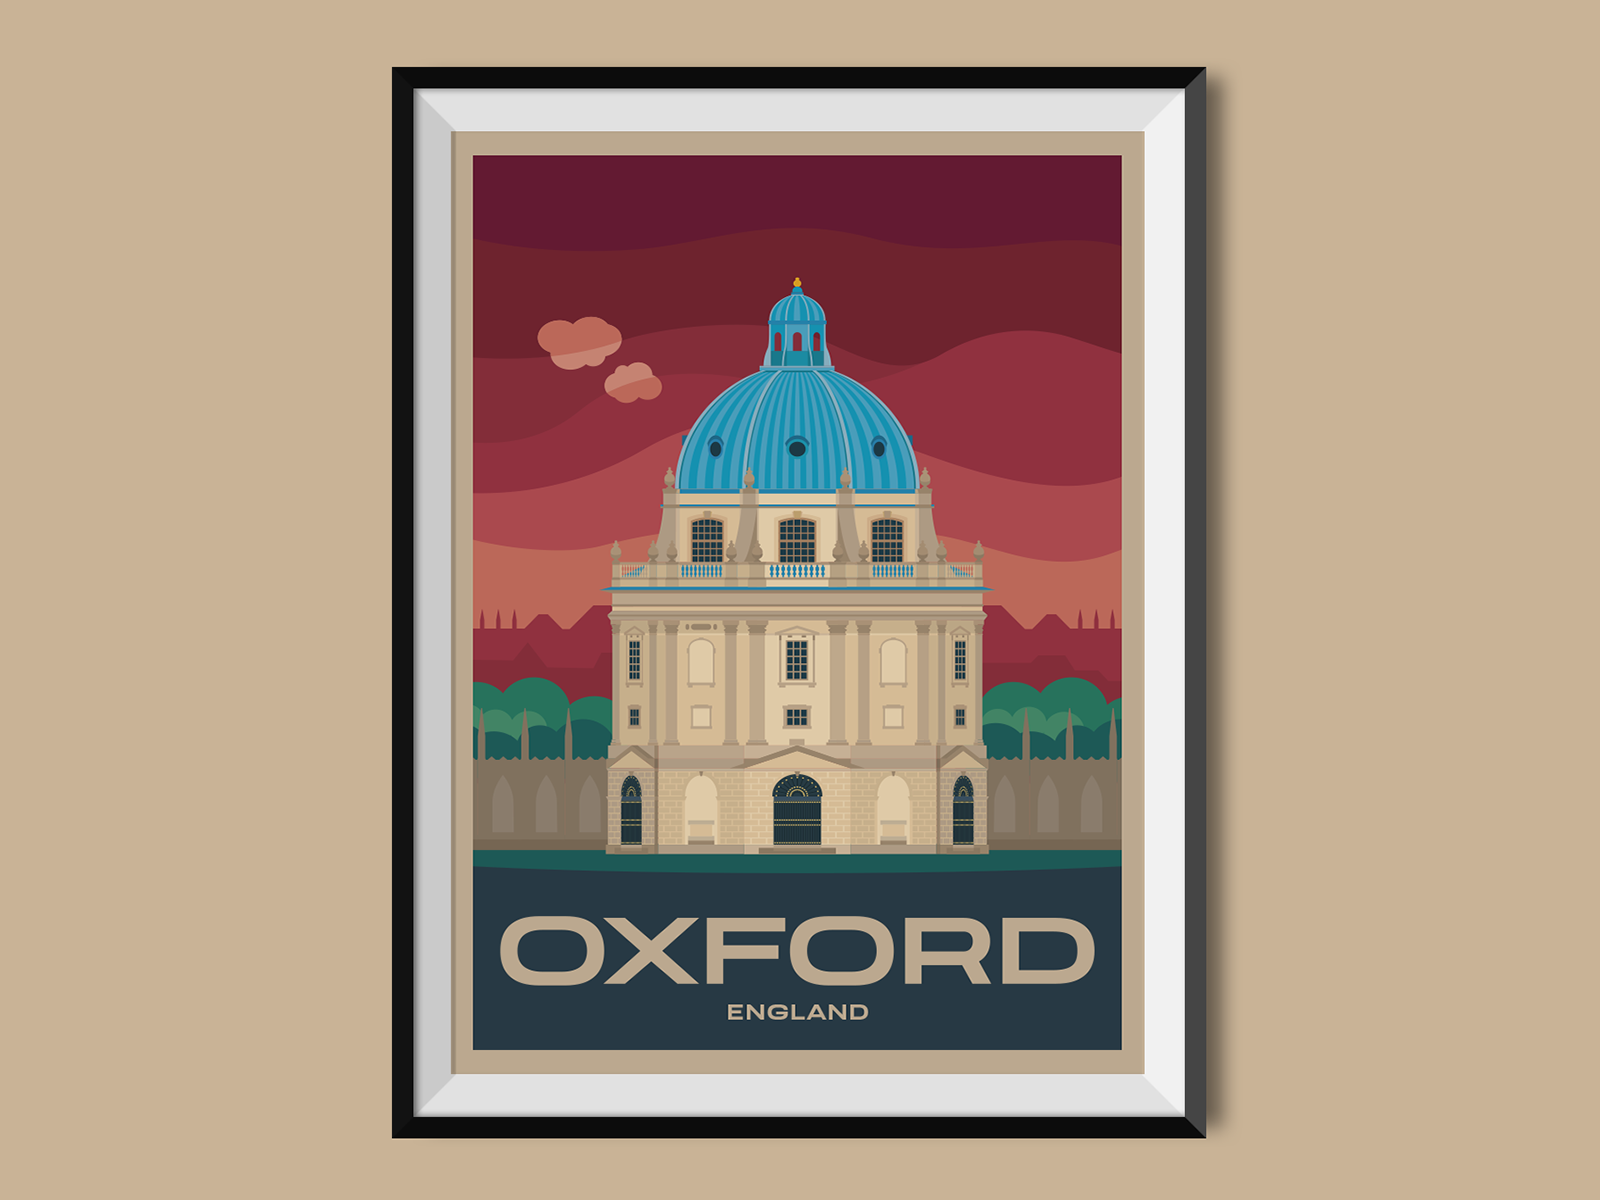 Oxford england illustration oxford poster poster design travel poster united kingdom